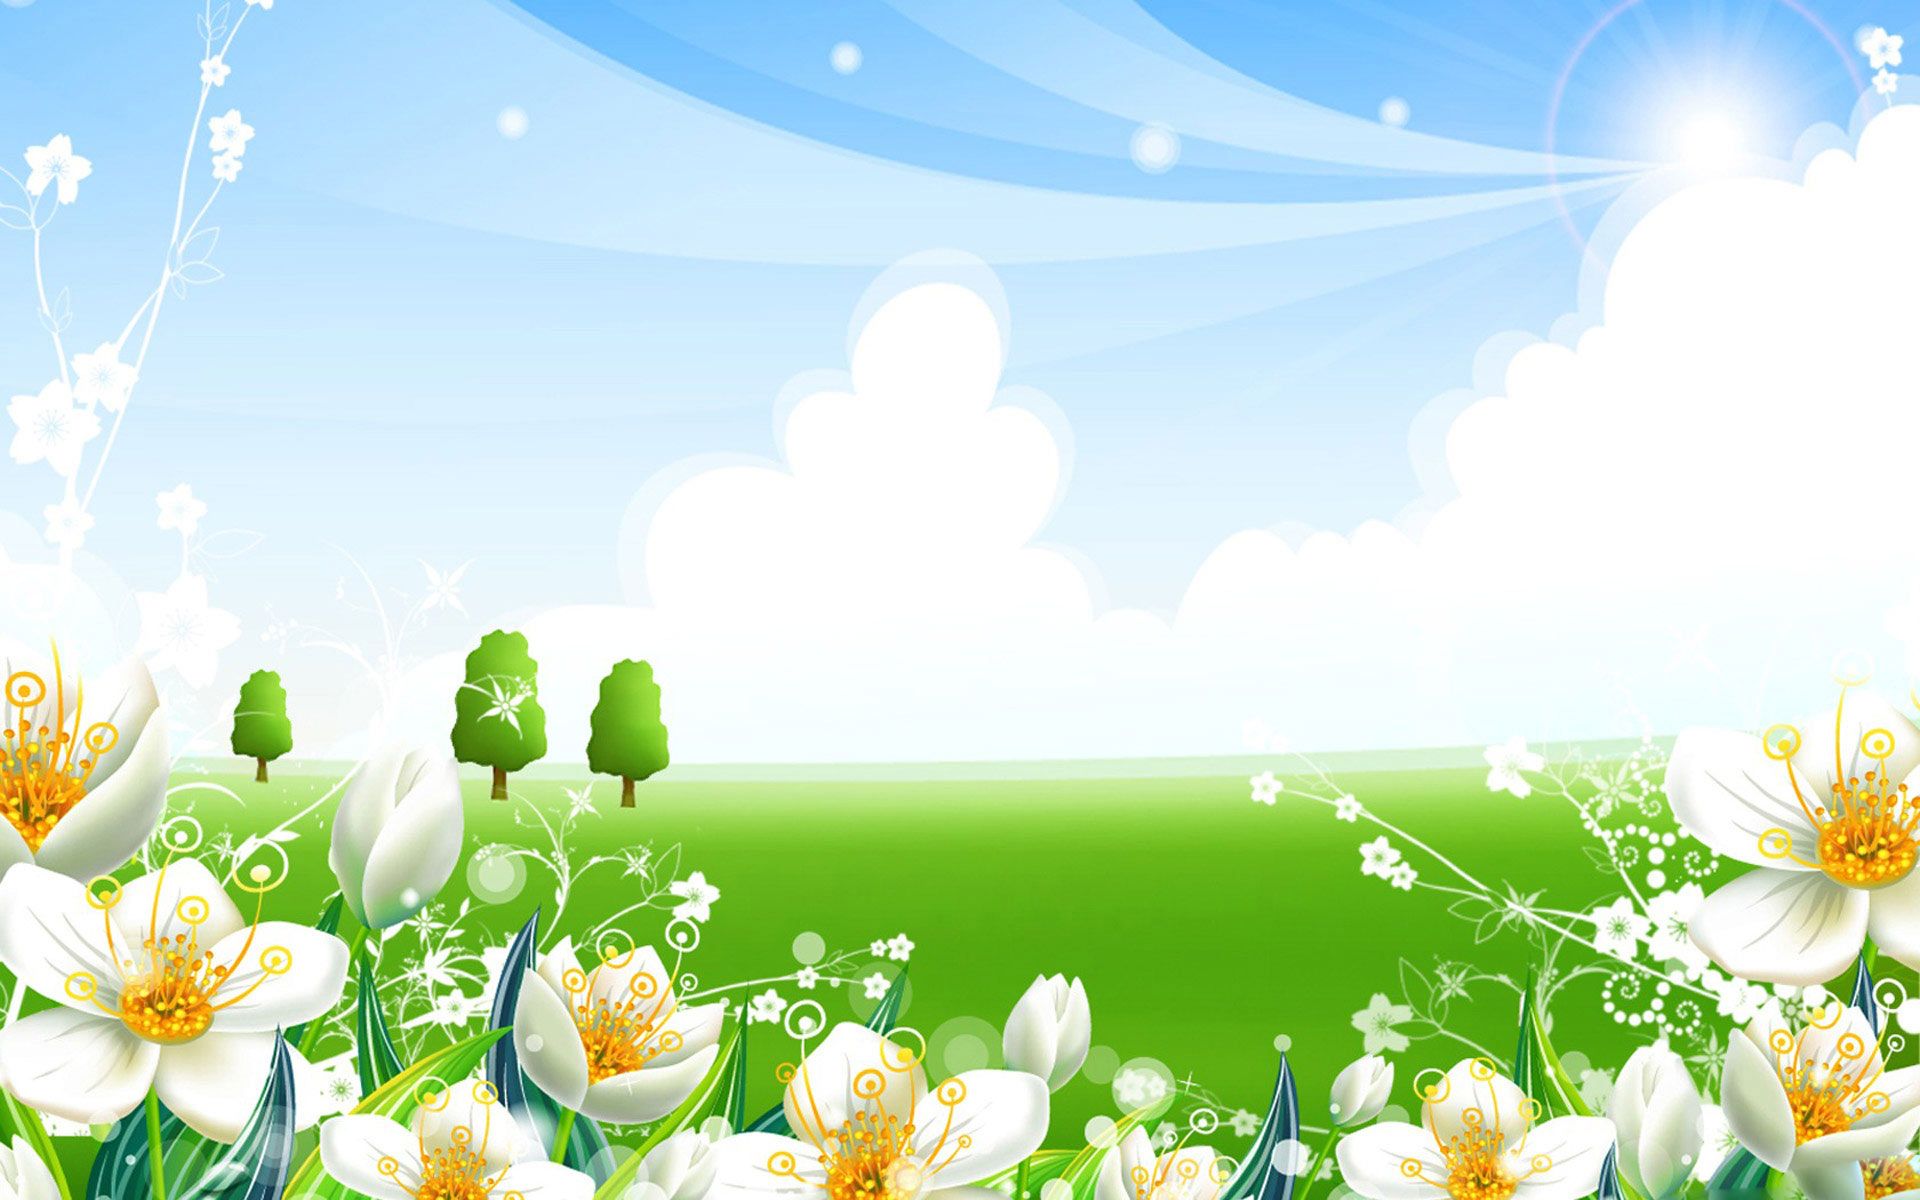 Cartoon Flower Background Images  Free Download on Freepik